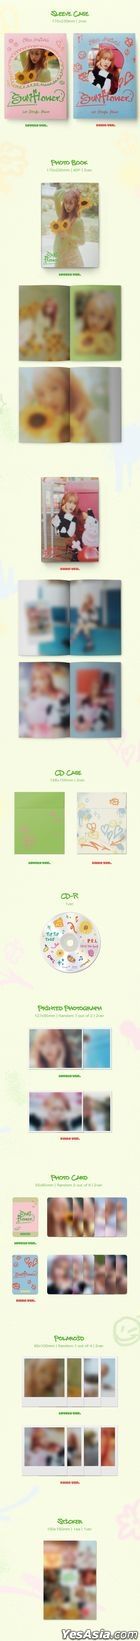 Weki Meki: Choi Yoo Jung Single Album Vol. 1 - Sunflower (Lovely Version)